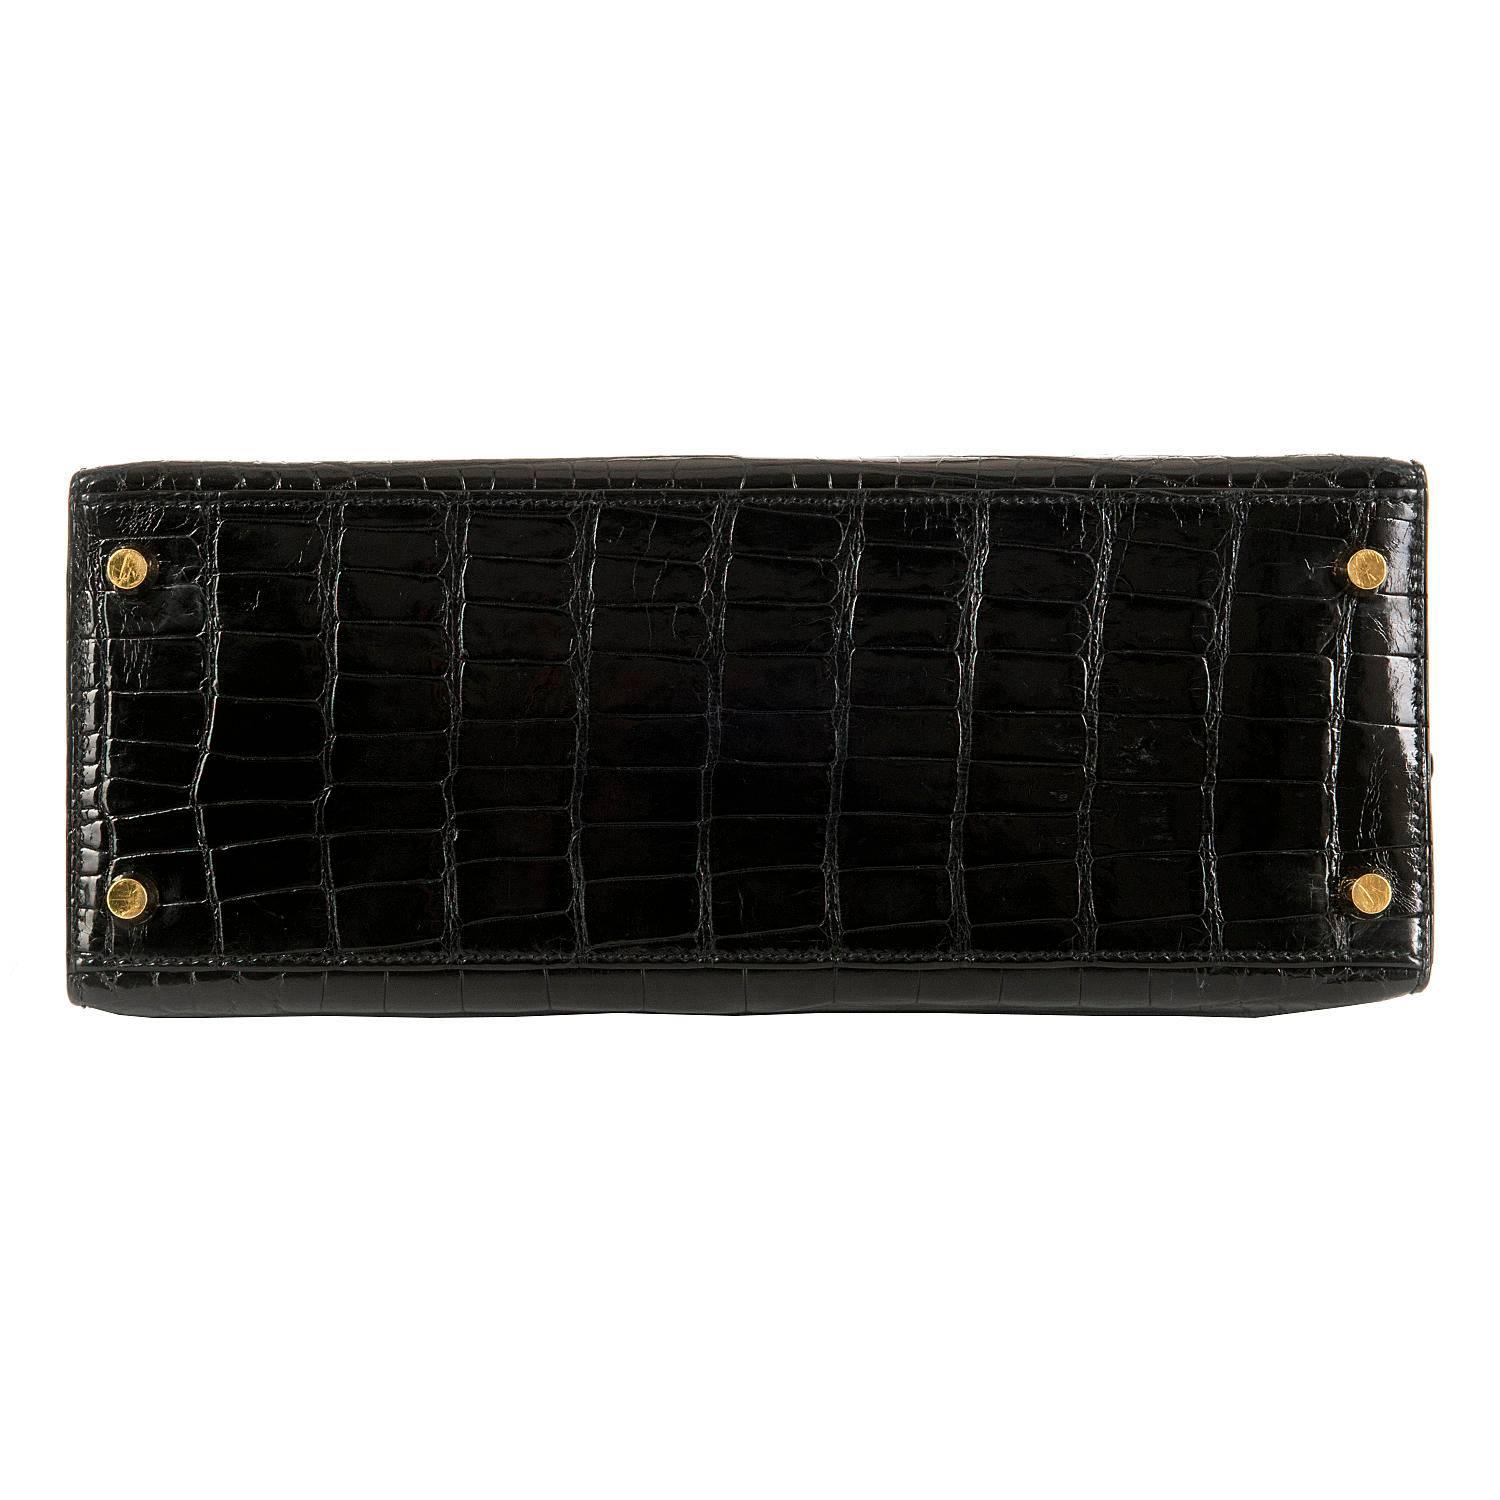 SO SO RARE Hermes 28cm Black Crocodile Alligator Kelly Bag & 'H' Bearn Wallet For Sale 1